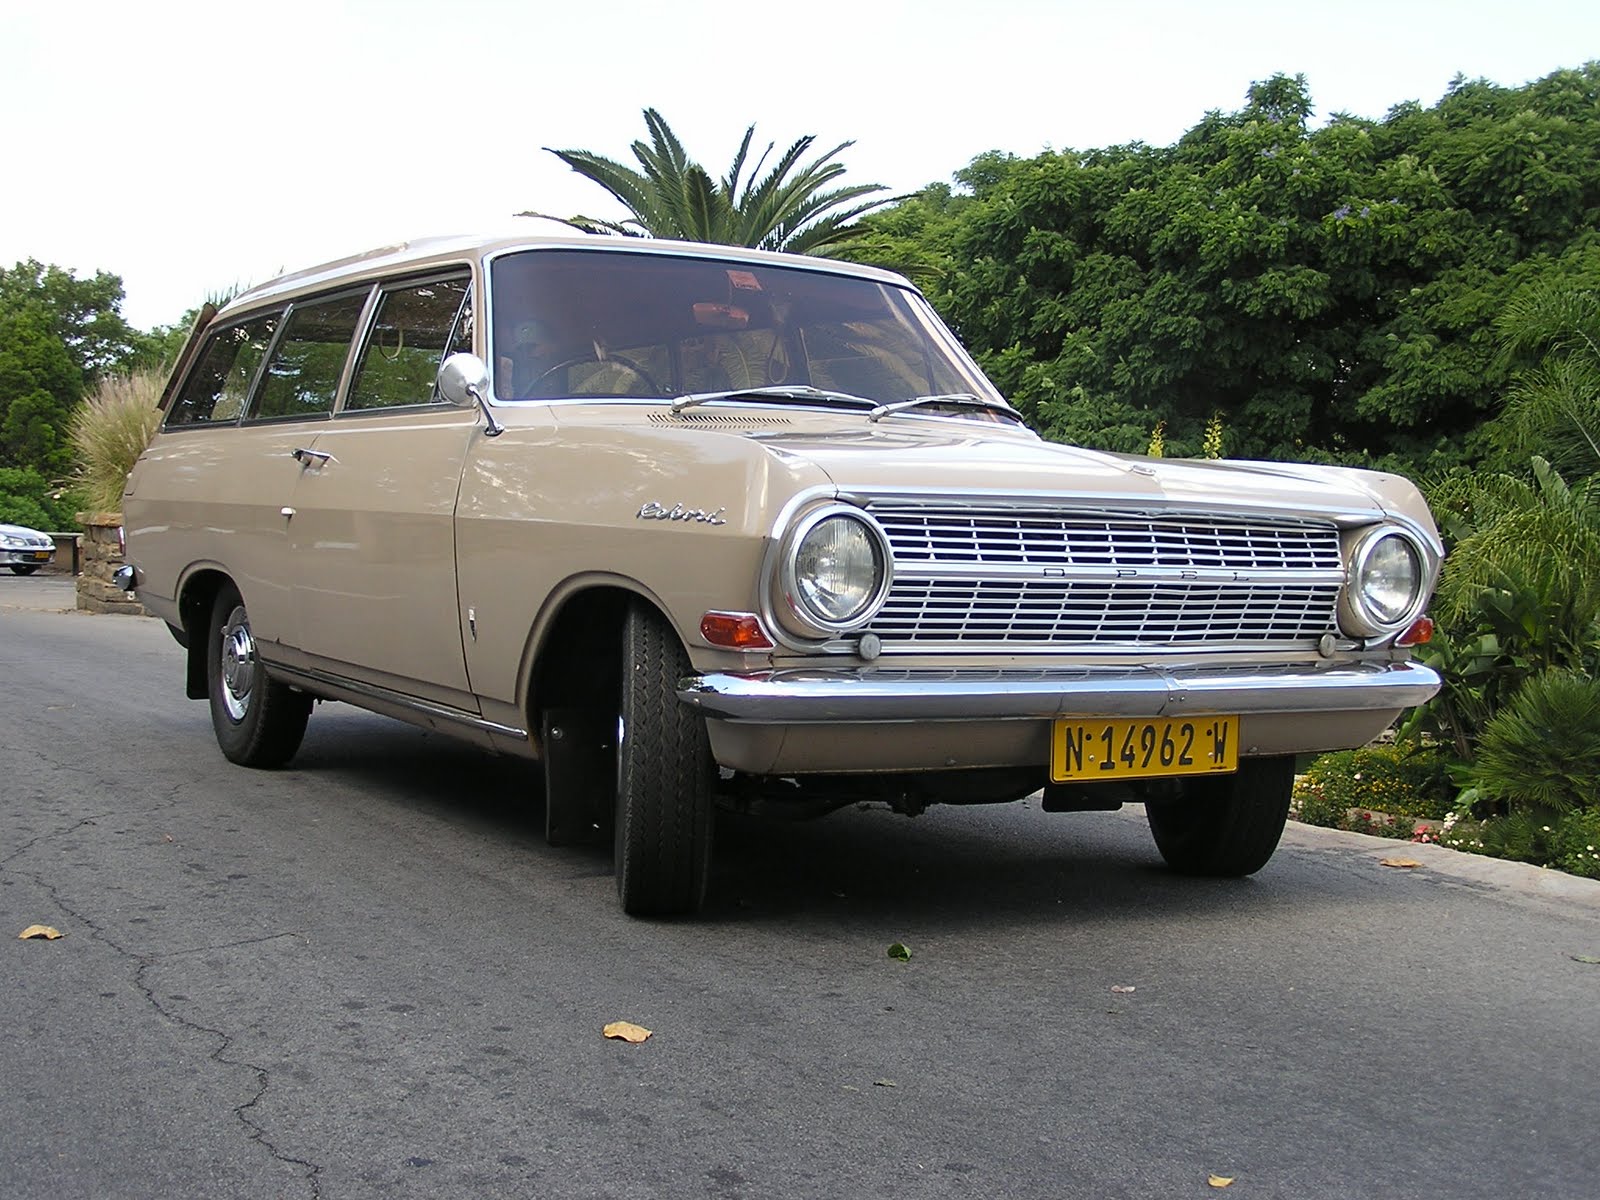 1963 Rekord Caravan from Namibia, Africa. Year: 1963